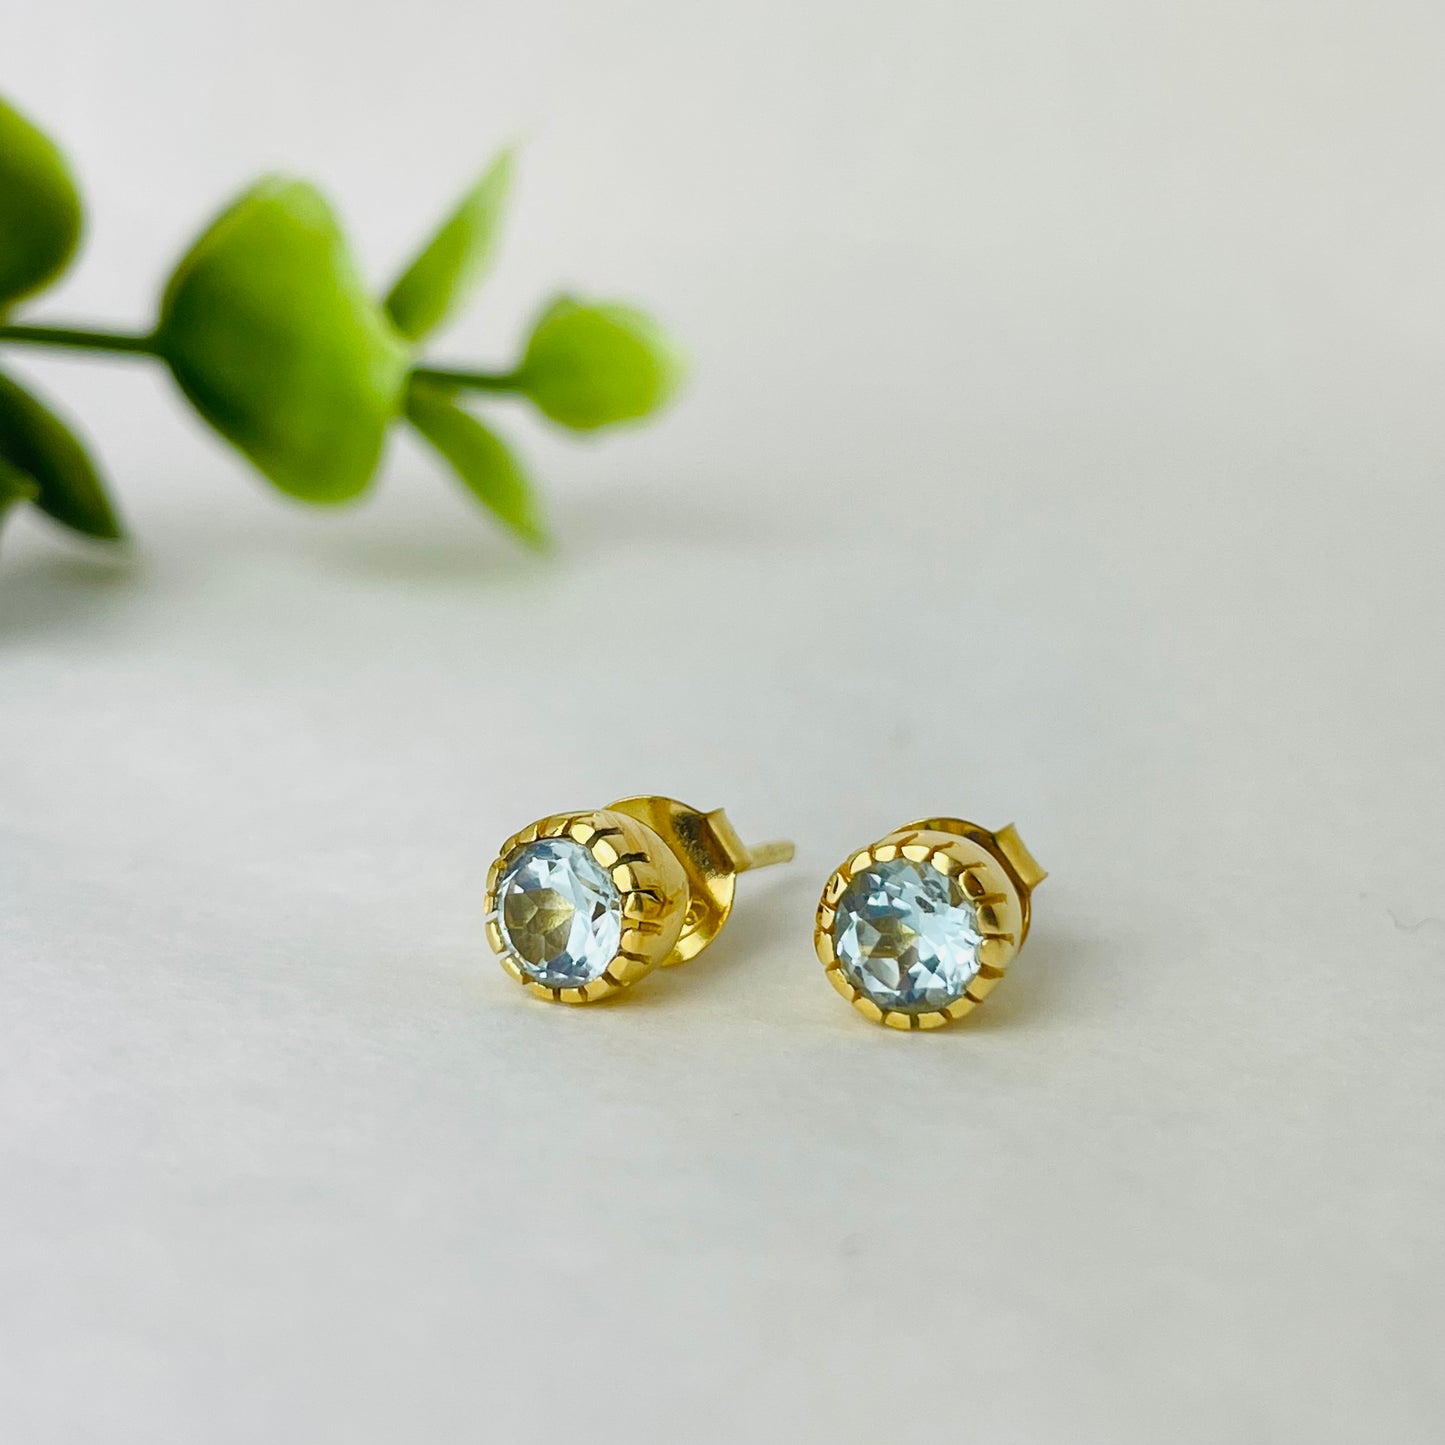 Treisi Jewelry 24k Gold Vermeil Stud Earrings - Multiple Stones